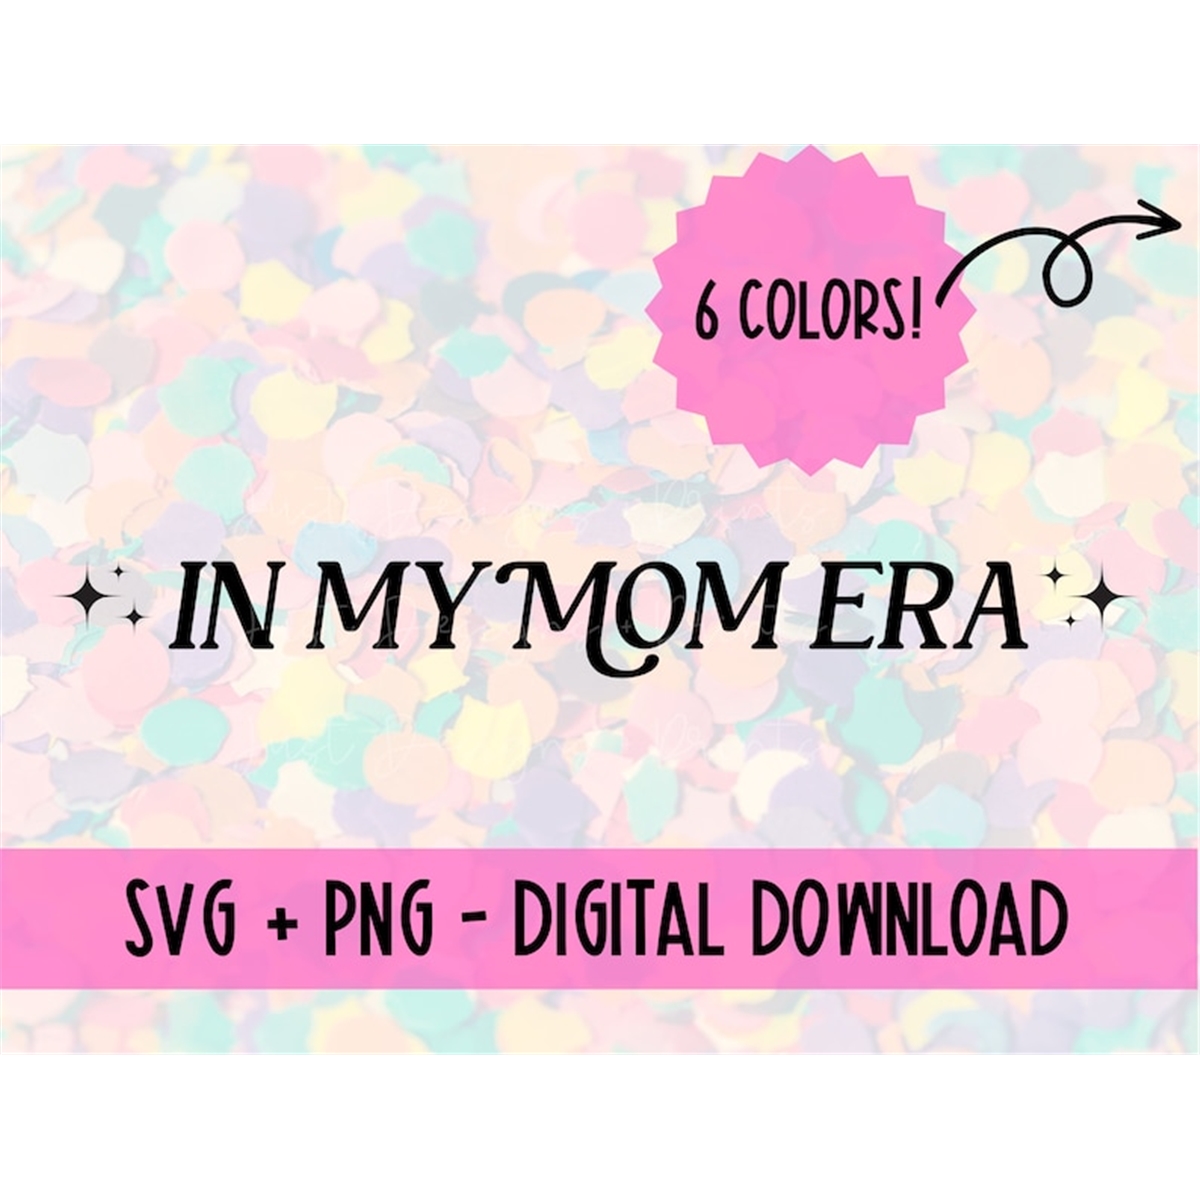 in-my-mom-era-svg-in-my-mom-era-png-in-my-mom-era-digital-image-1